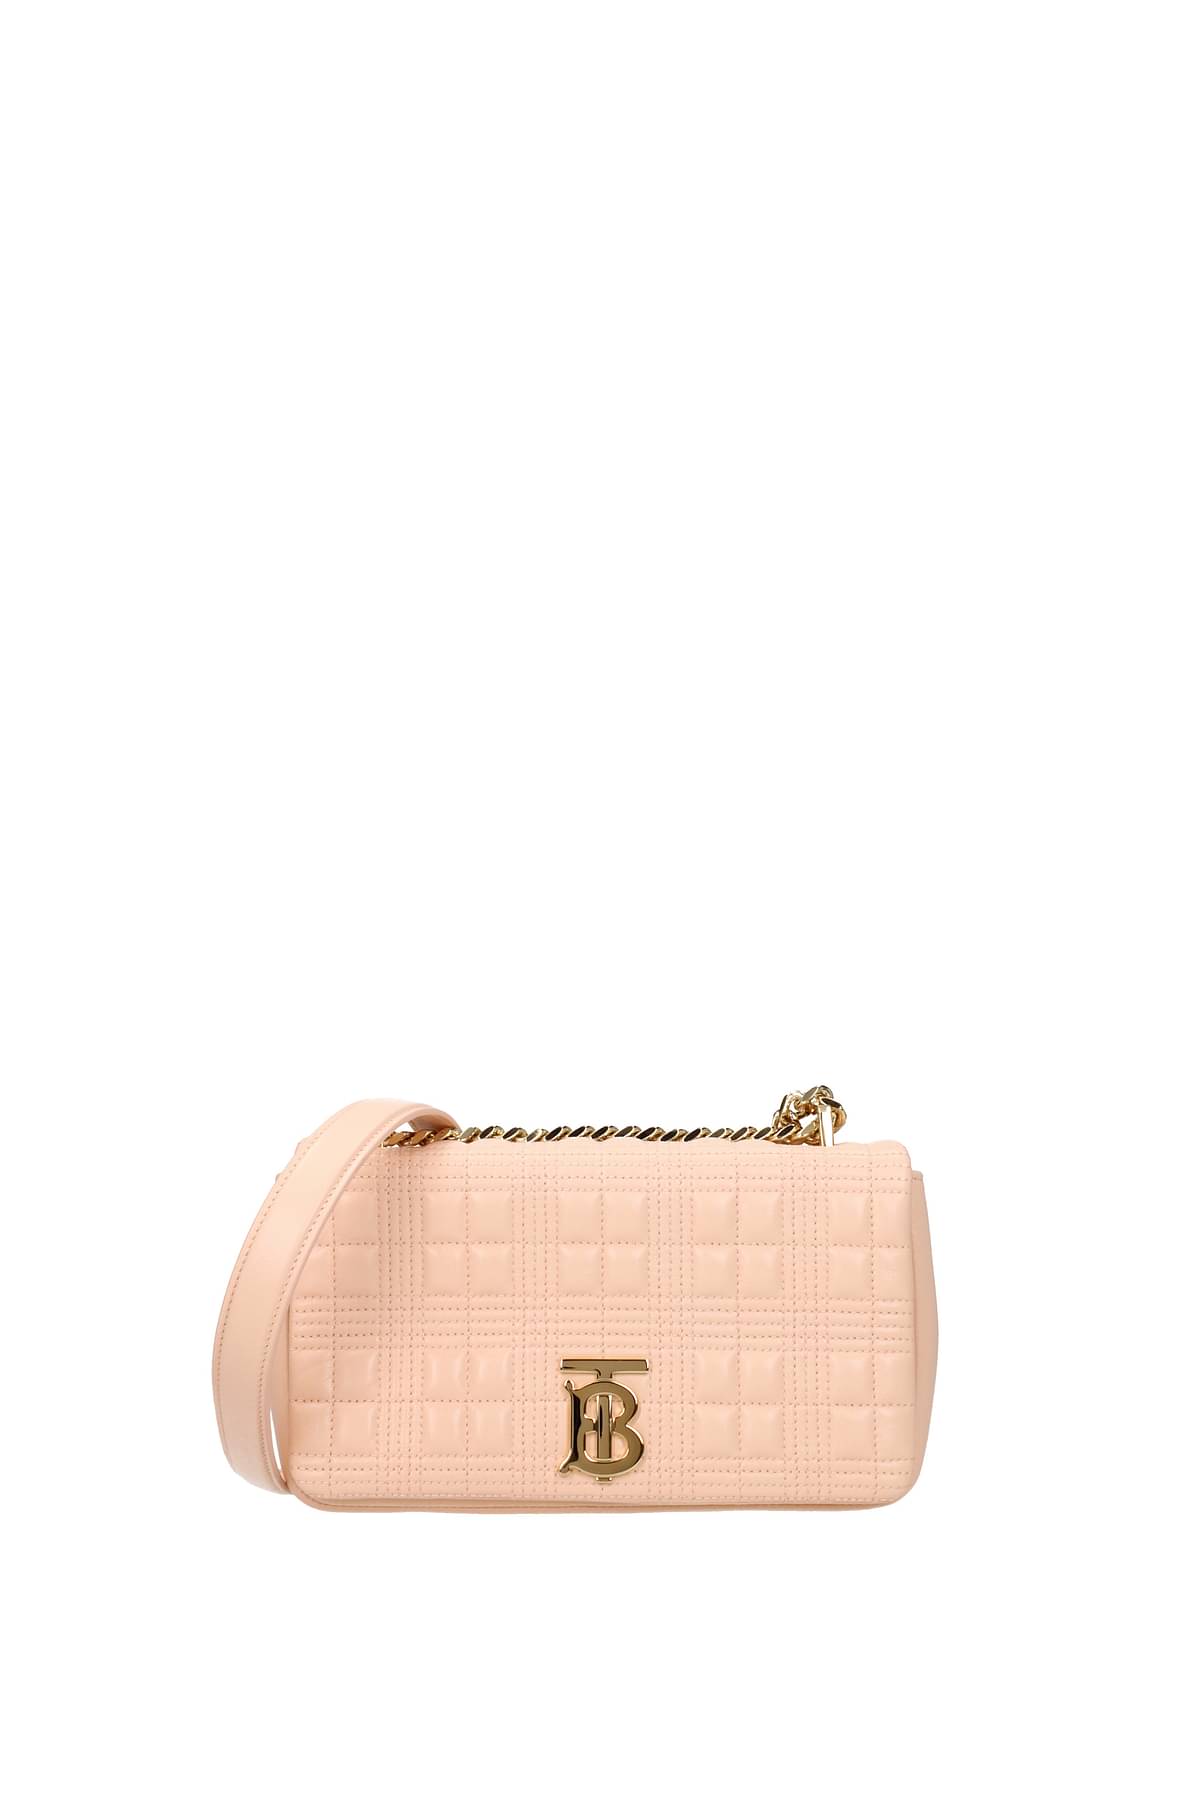 Burberry Crossbody Bag lola Women 8055693 Leather Pink Peach 1352€